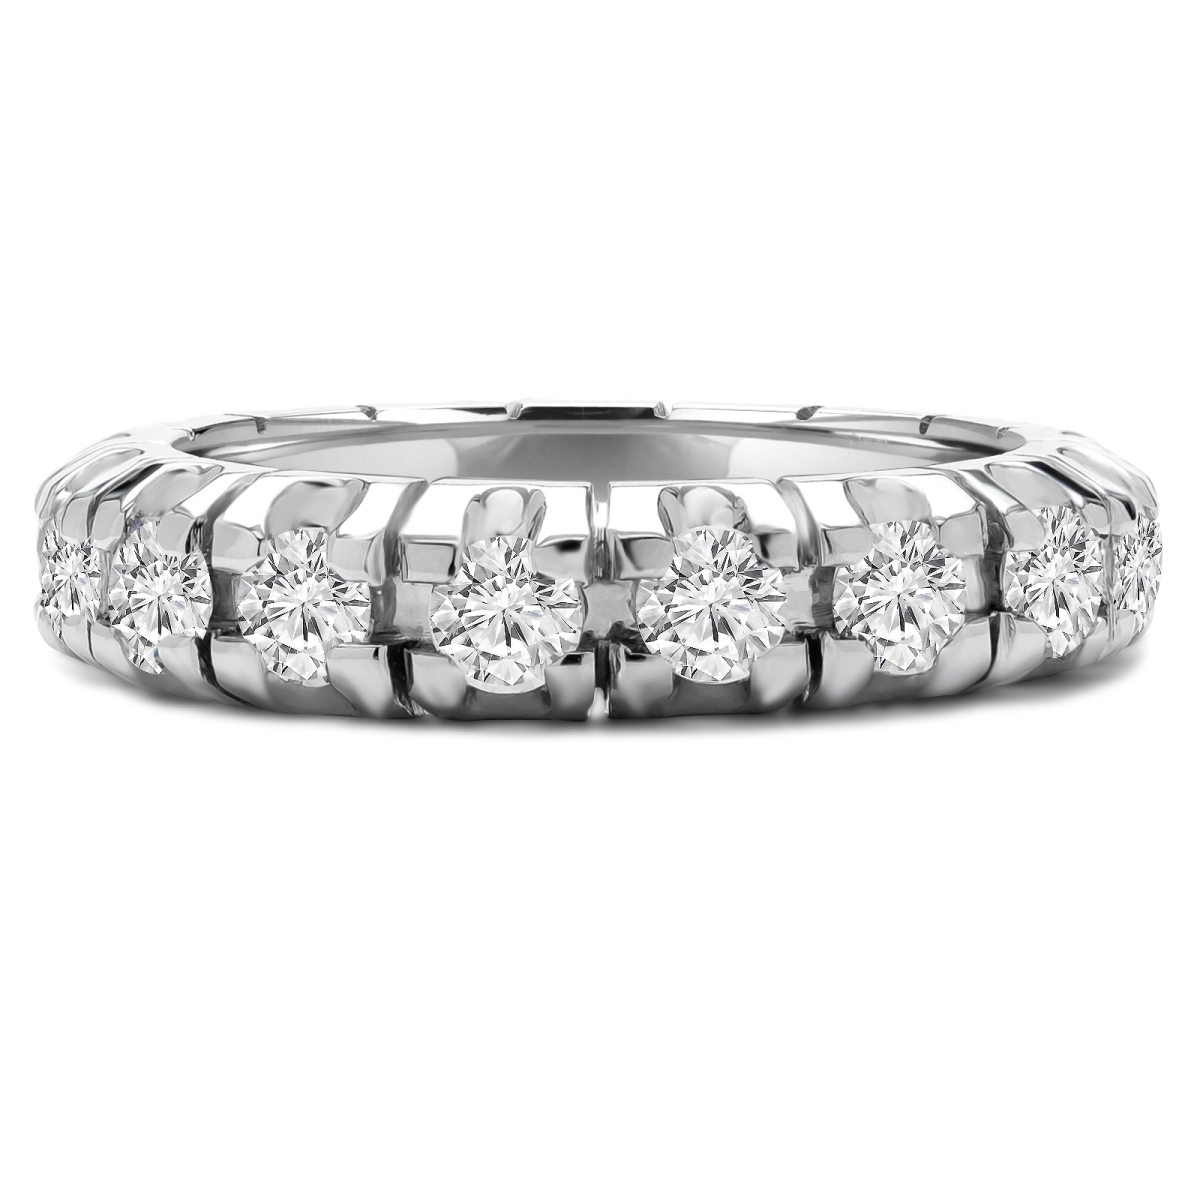 Great Gems 3.33 CTW Round Diamond Full-Eternity Anniversary Wedding Band Ring in 18K White Gold - Size 8